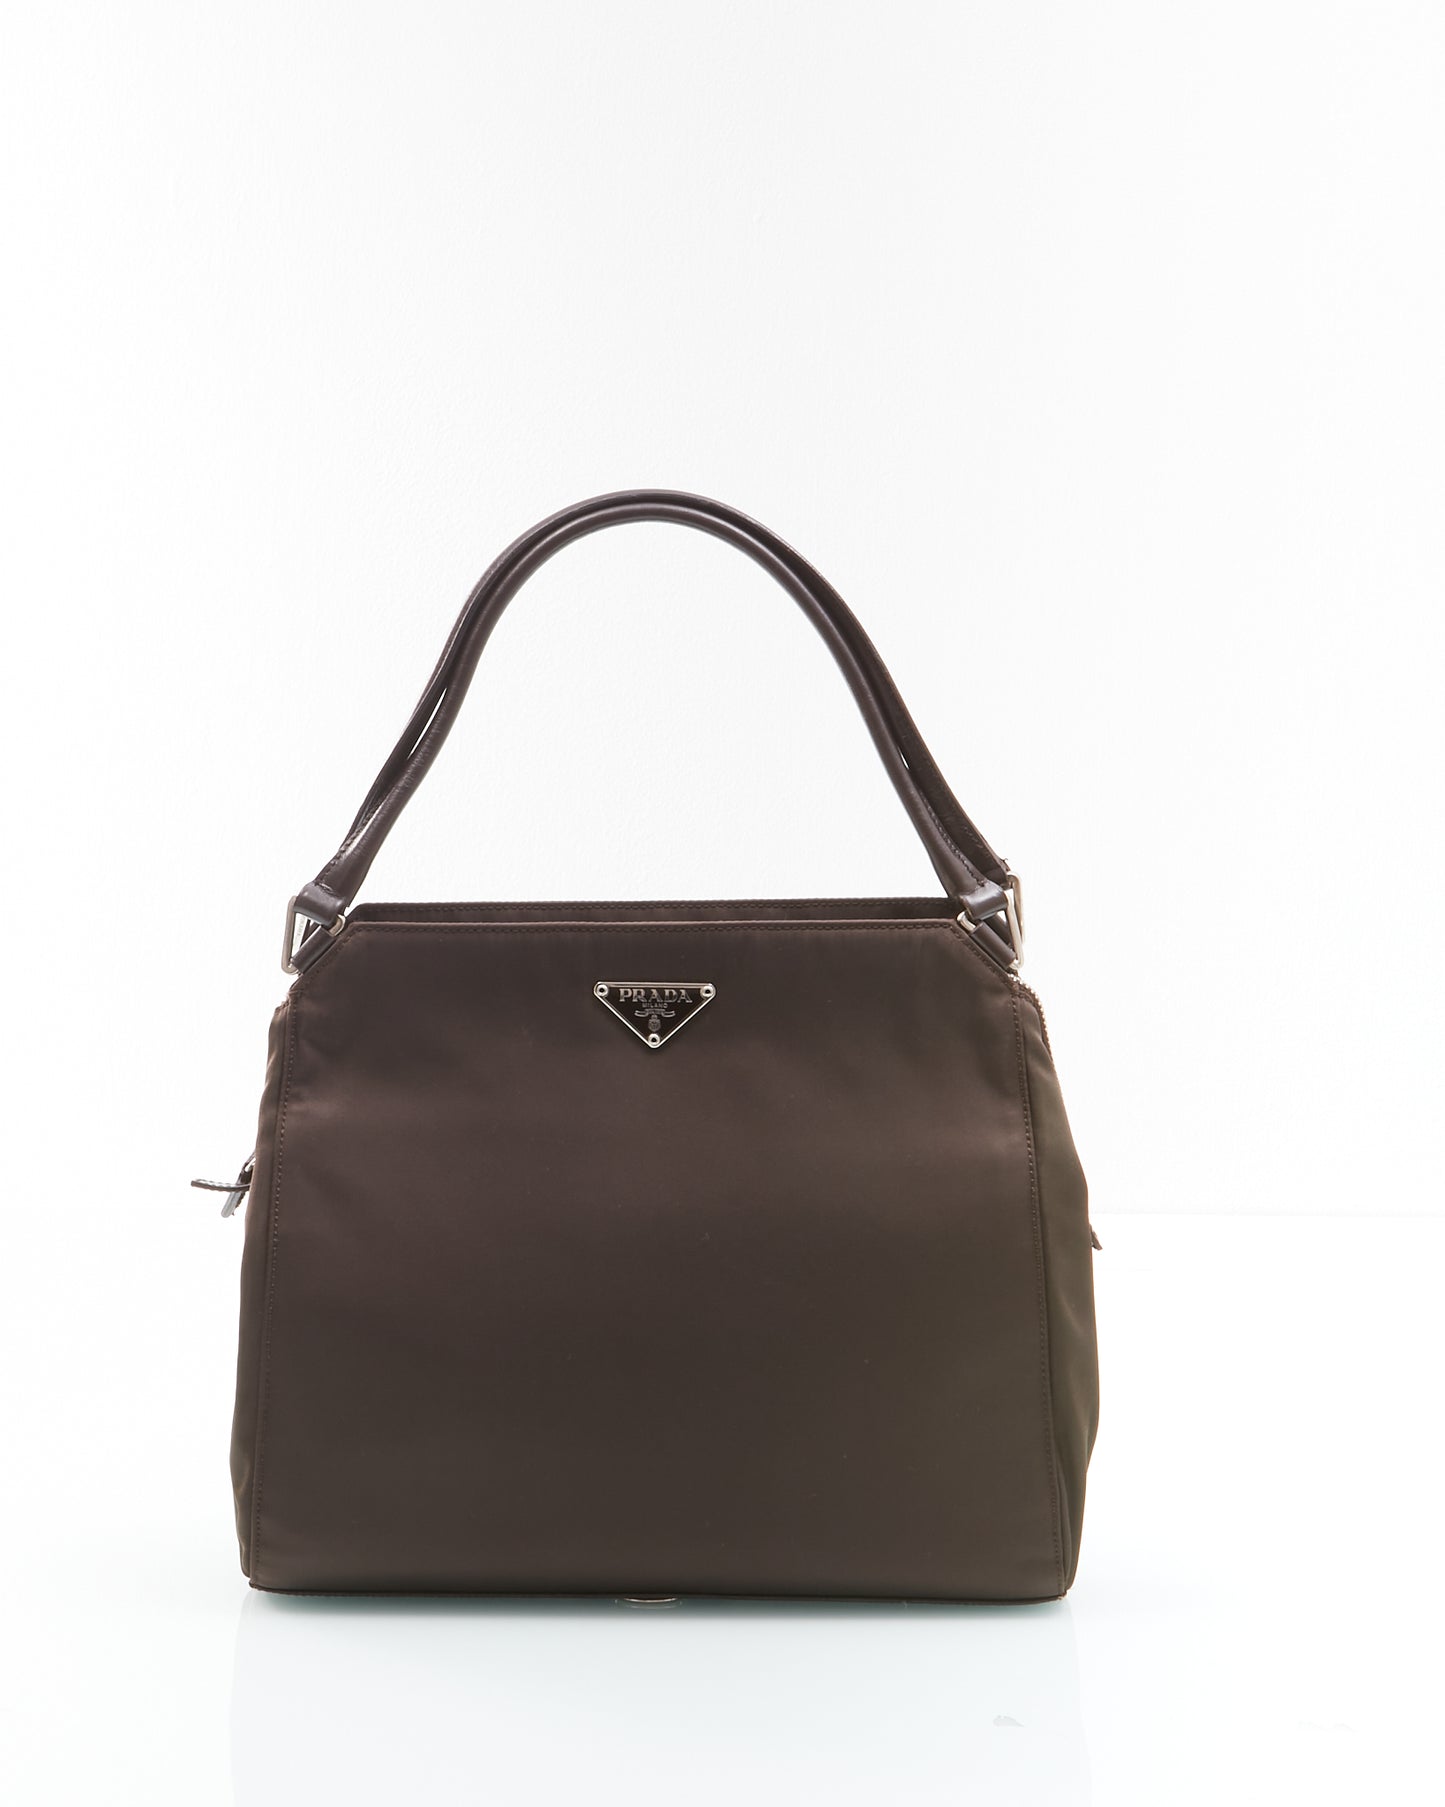 Prada Brown Tessuto Nylon Leather Handle Tote Handbag